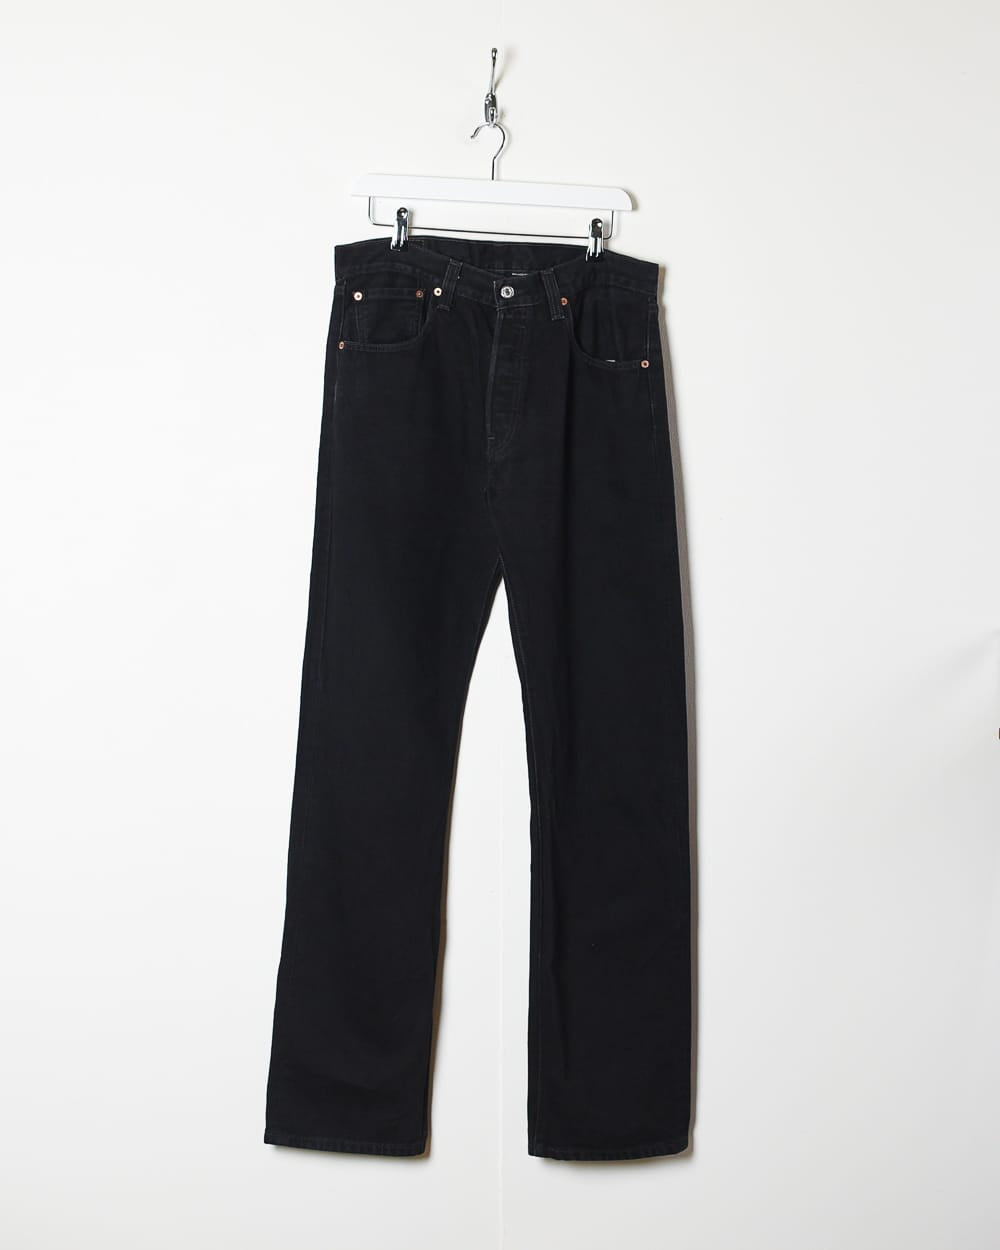 Black Levi's 501 Jeans - W33 L34